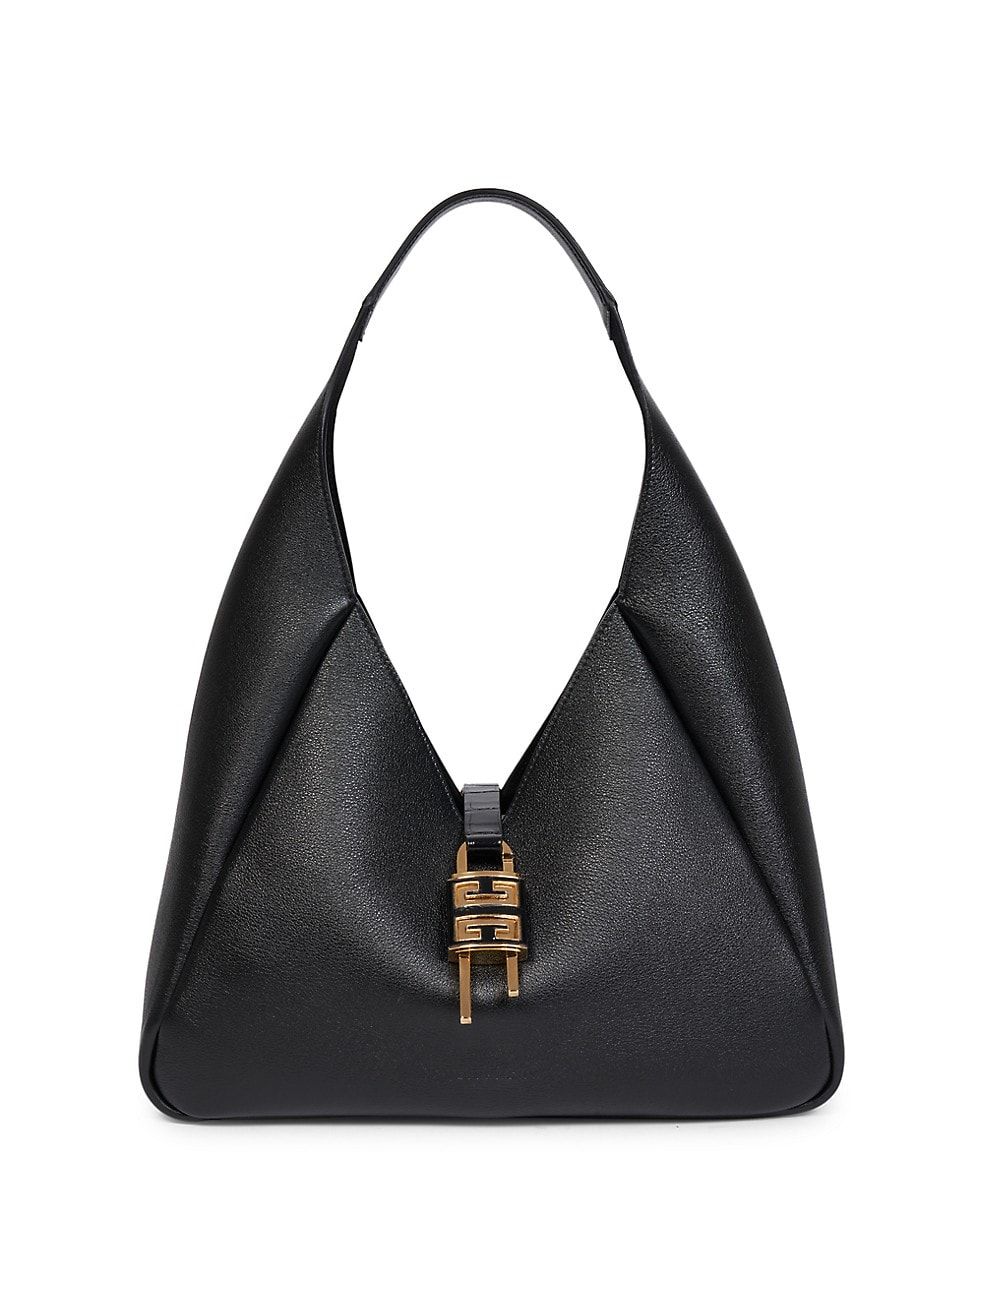 Givenchy Medium Leather Hobo Bag | Saks Fifth Avenue